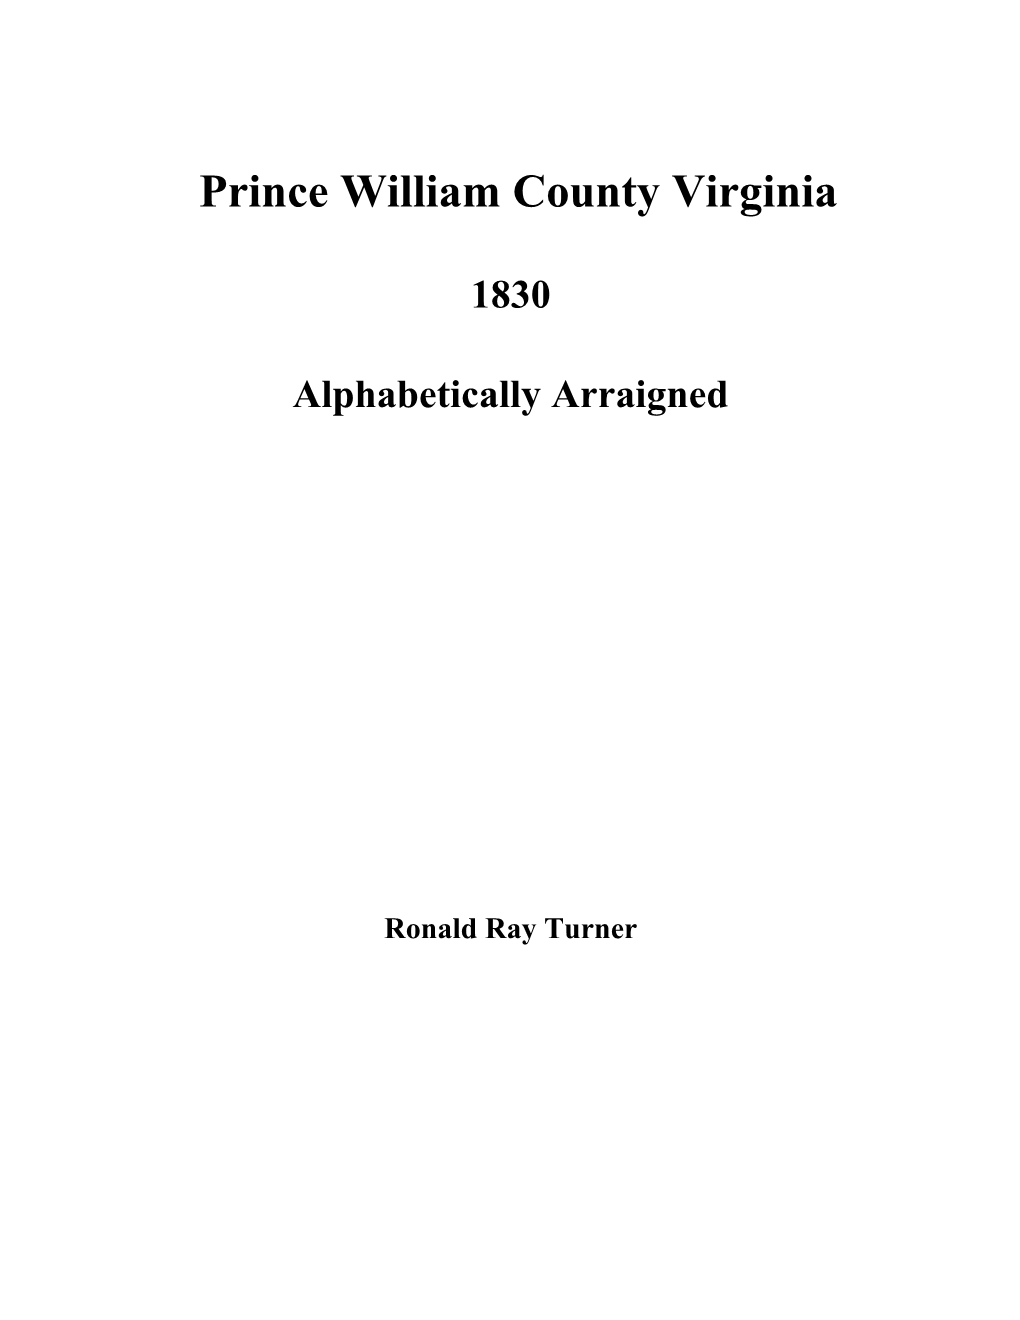 Prince William County Virginia s4